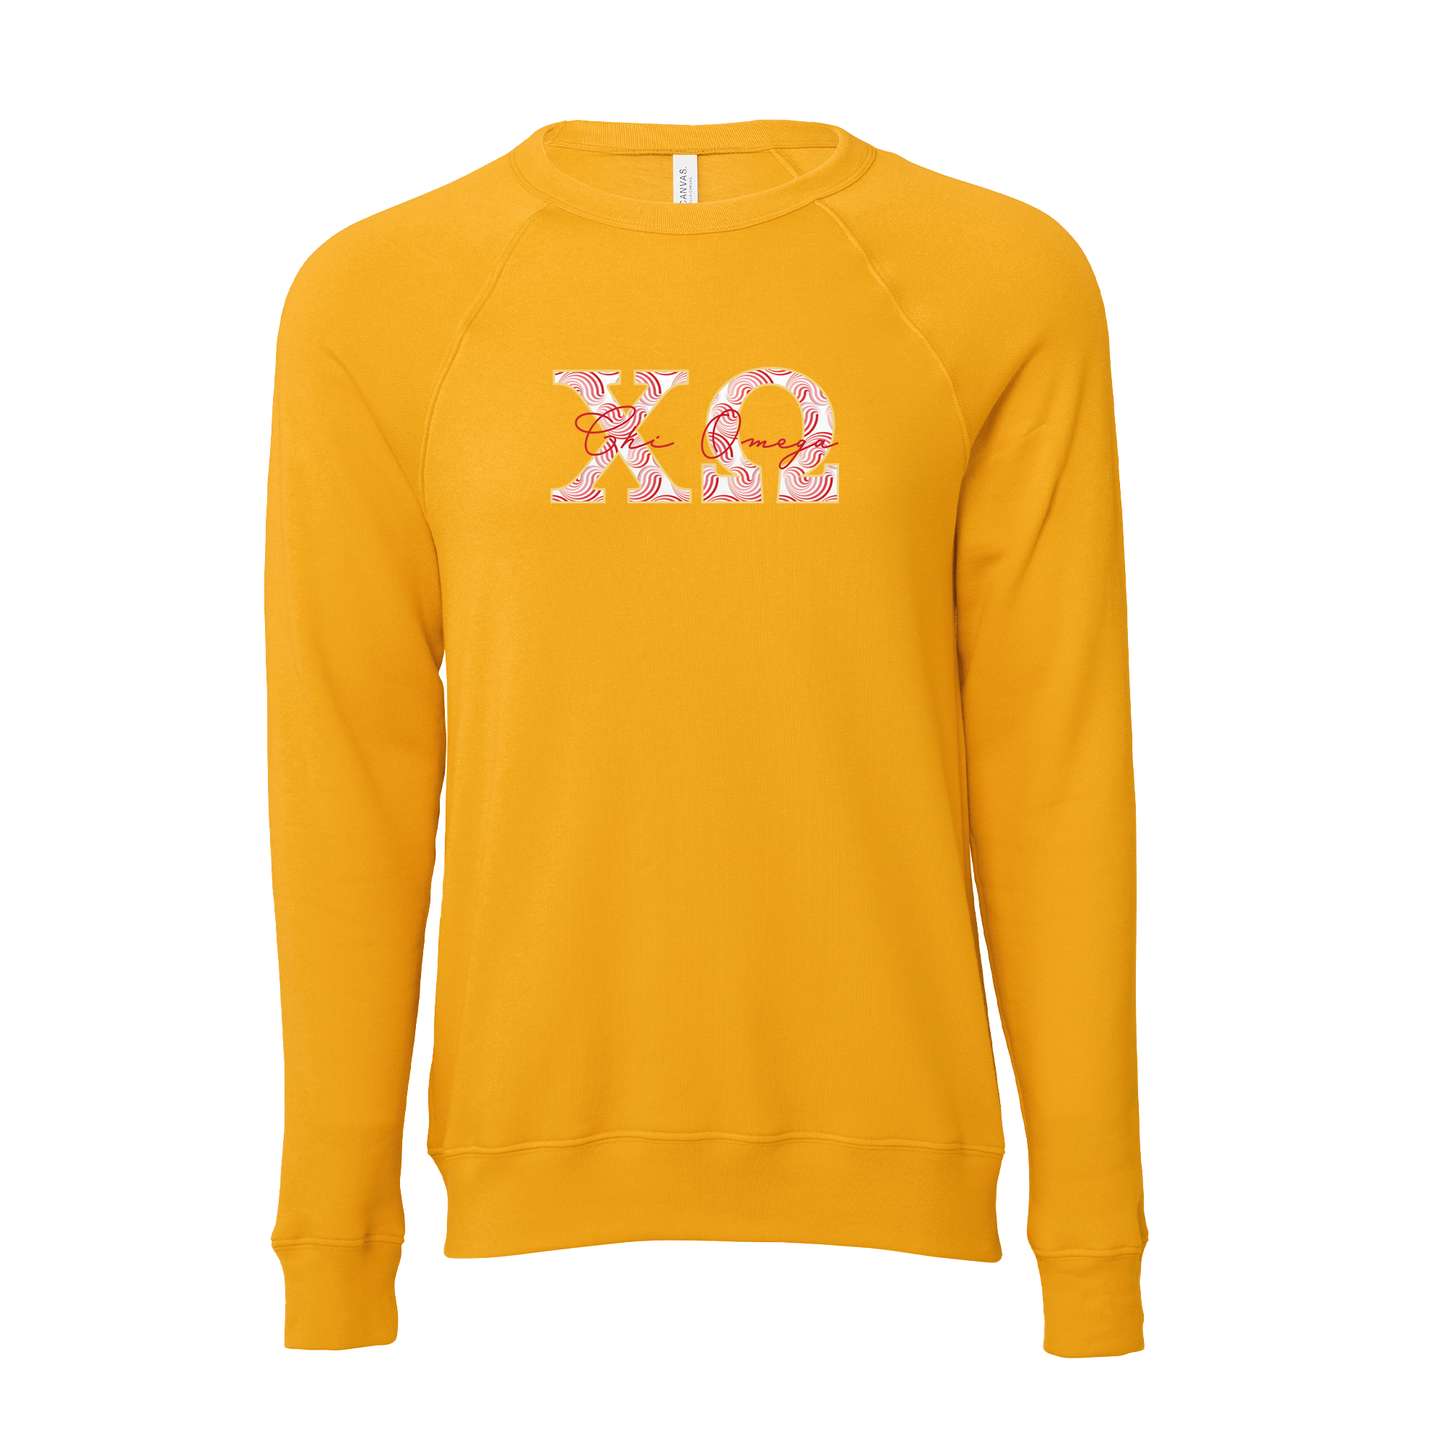 Chi Omega Applique Letters Crewneck Sweatshirt